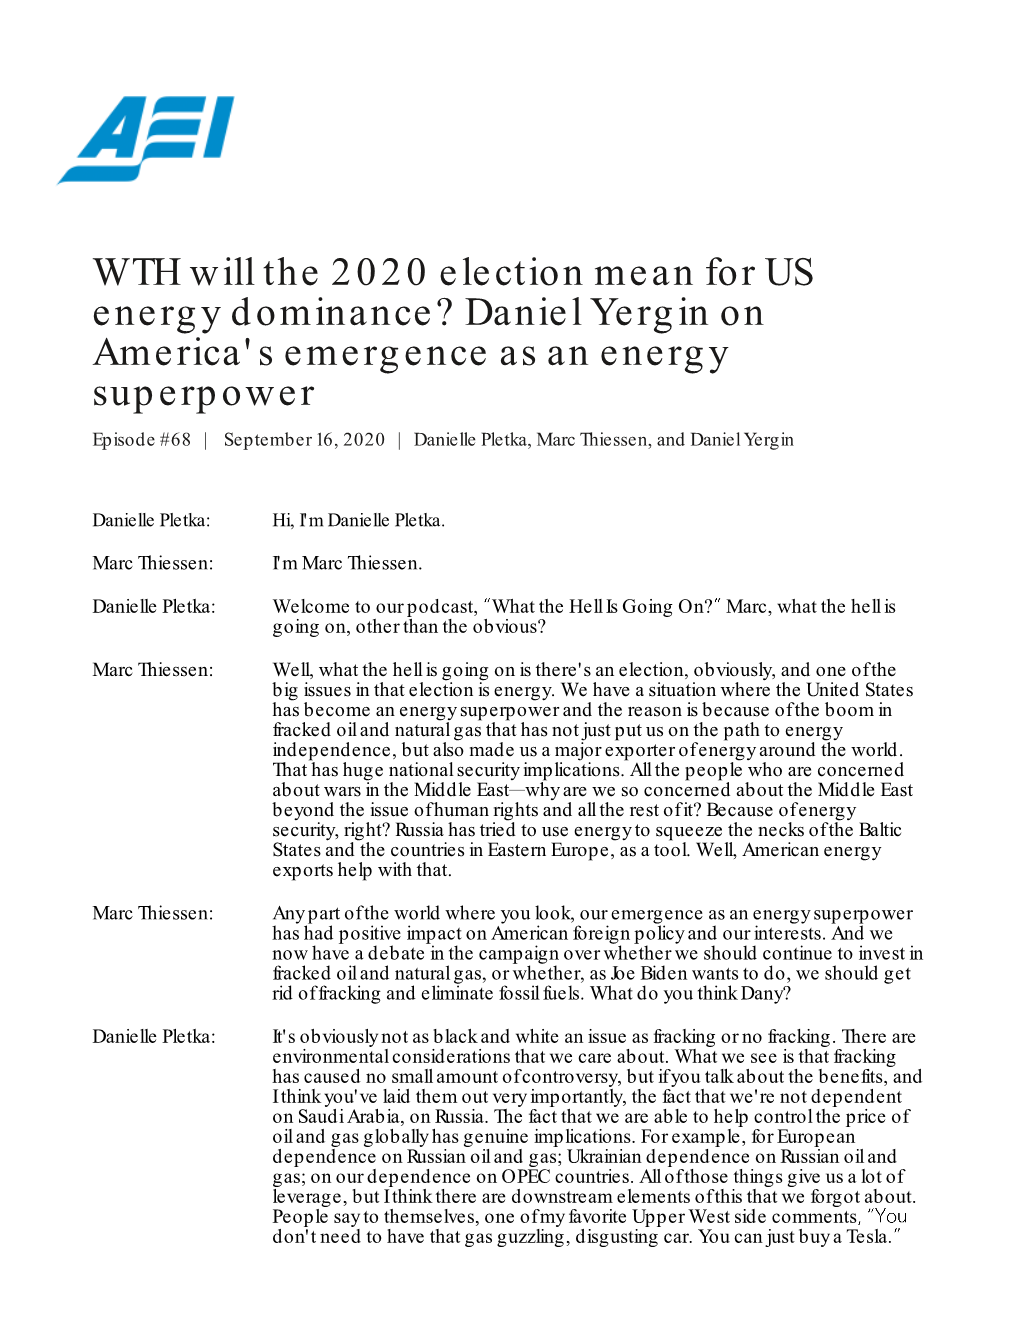 Daniel Yergin on America's Emergence As an Energy Superpower